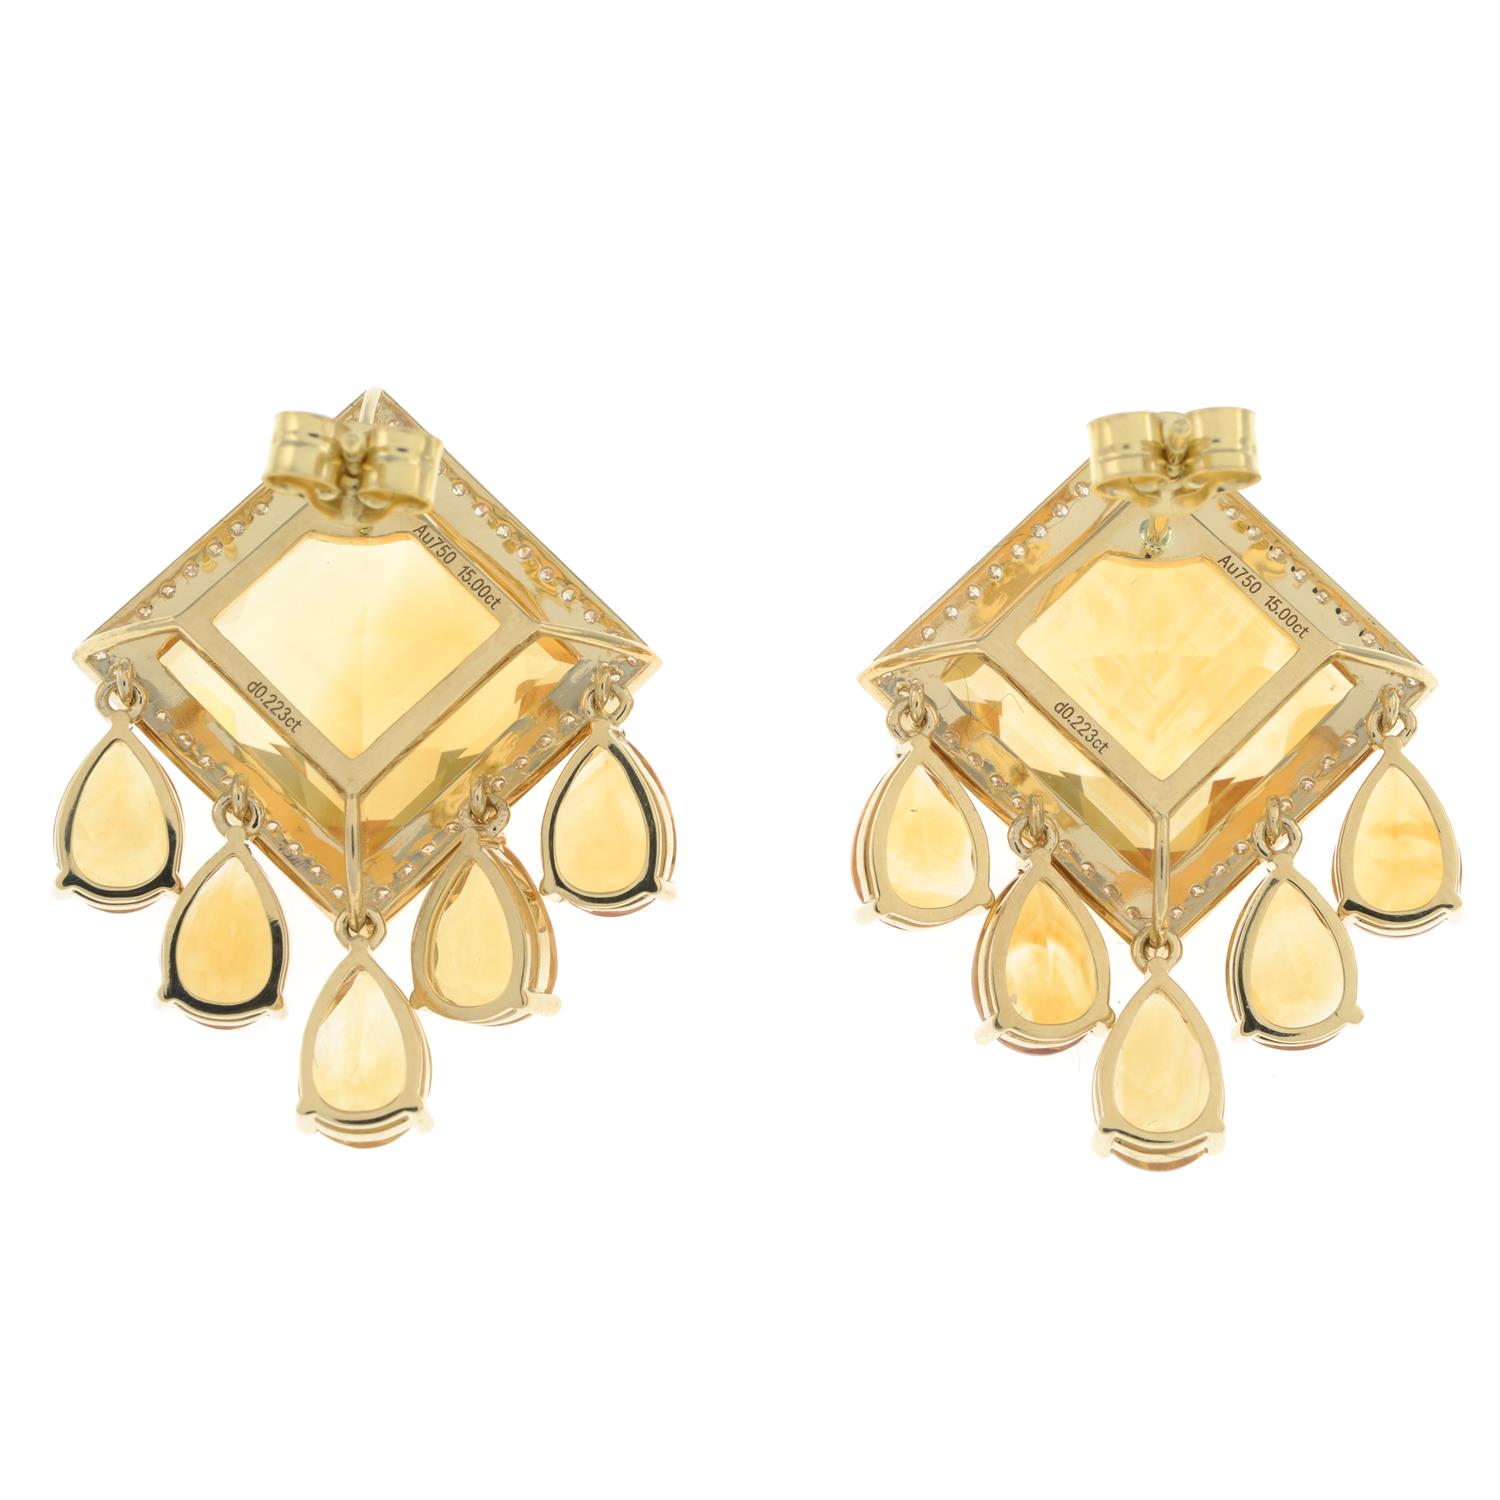 Citrine and diamond earrings - Image 3 of 3